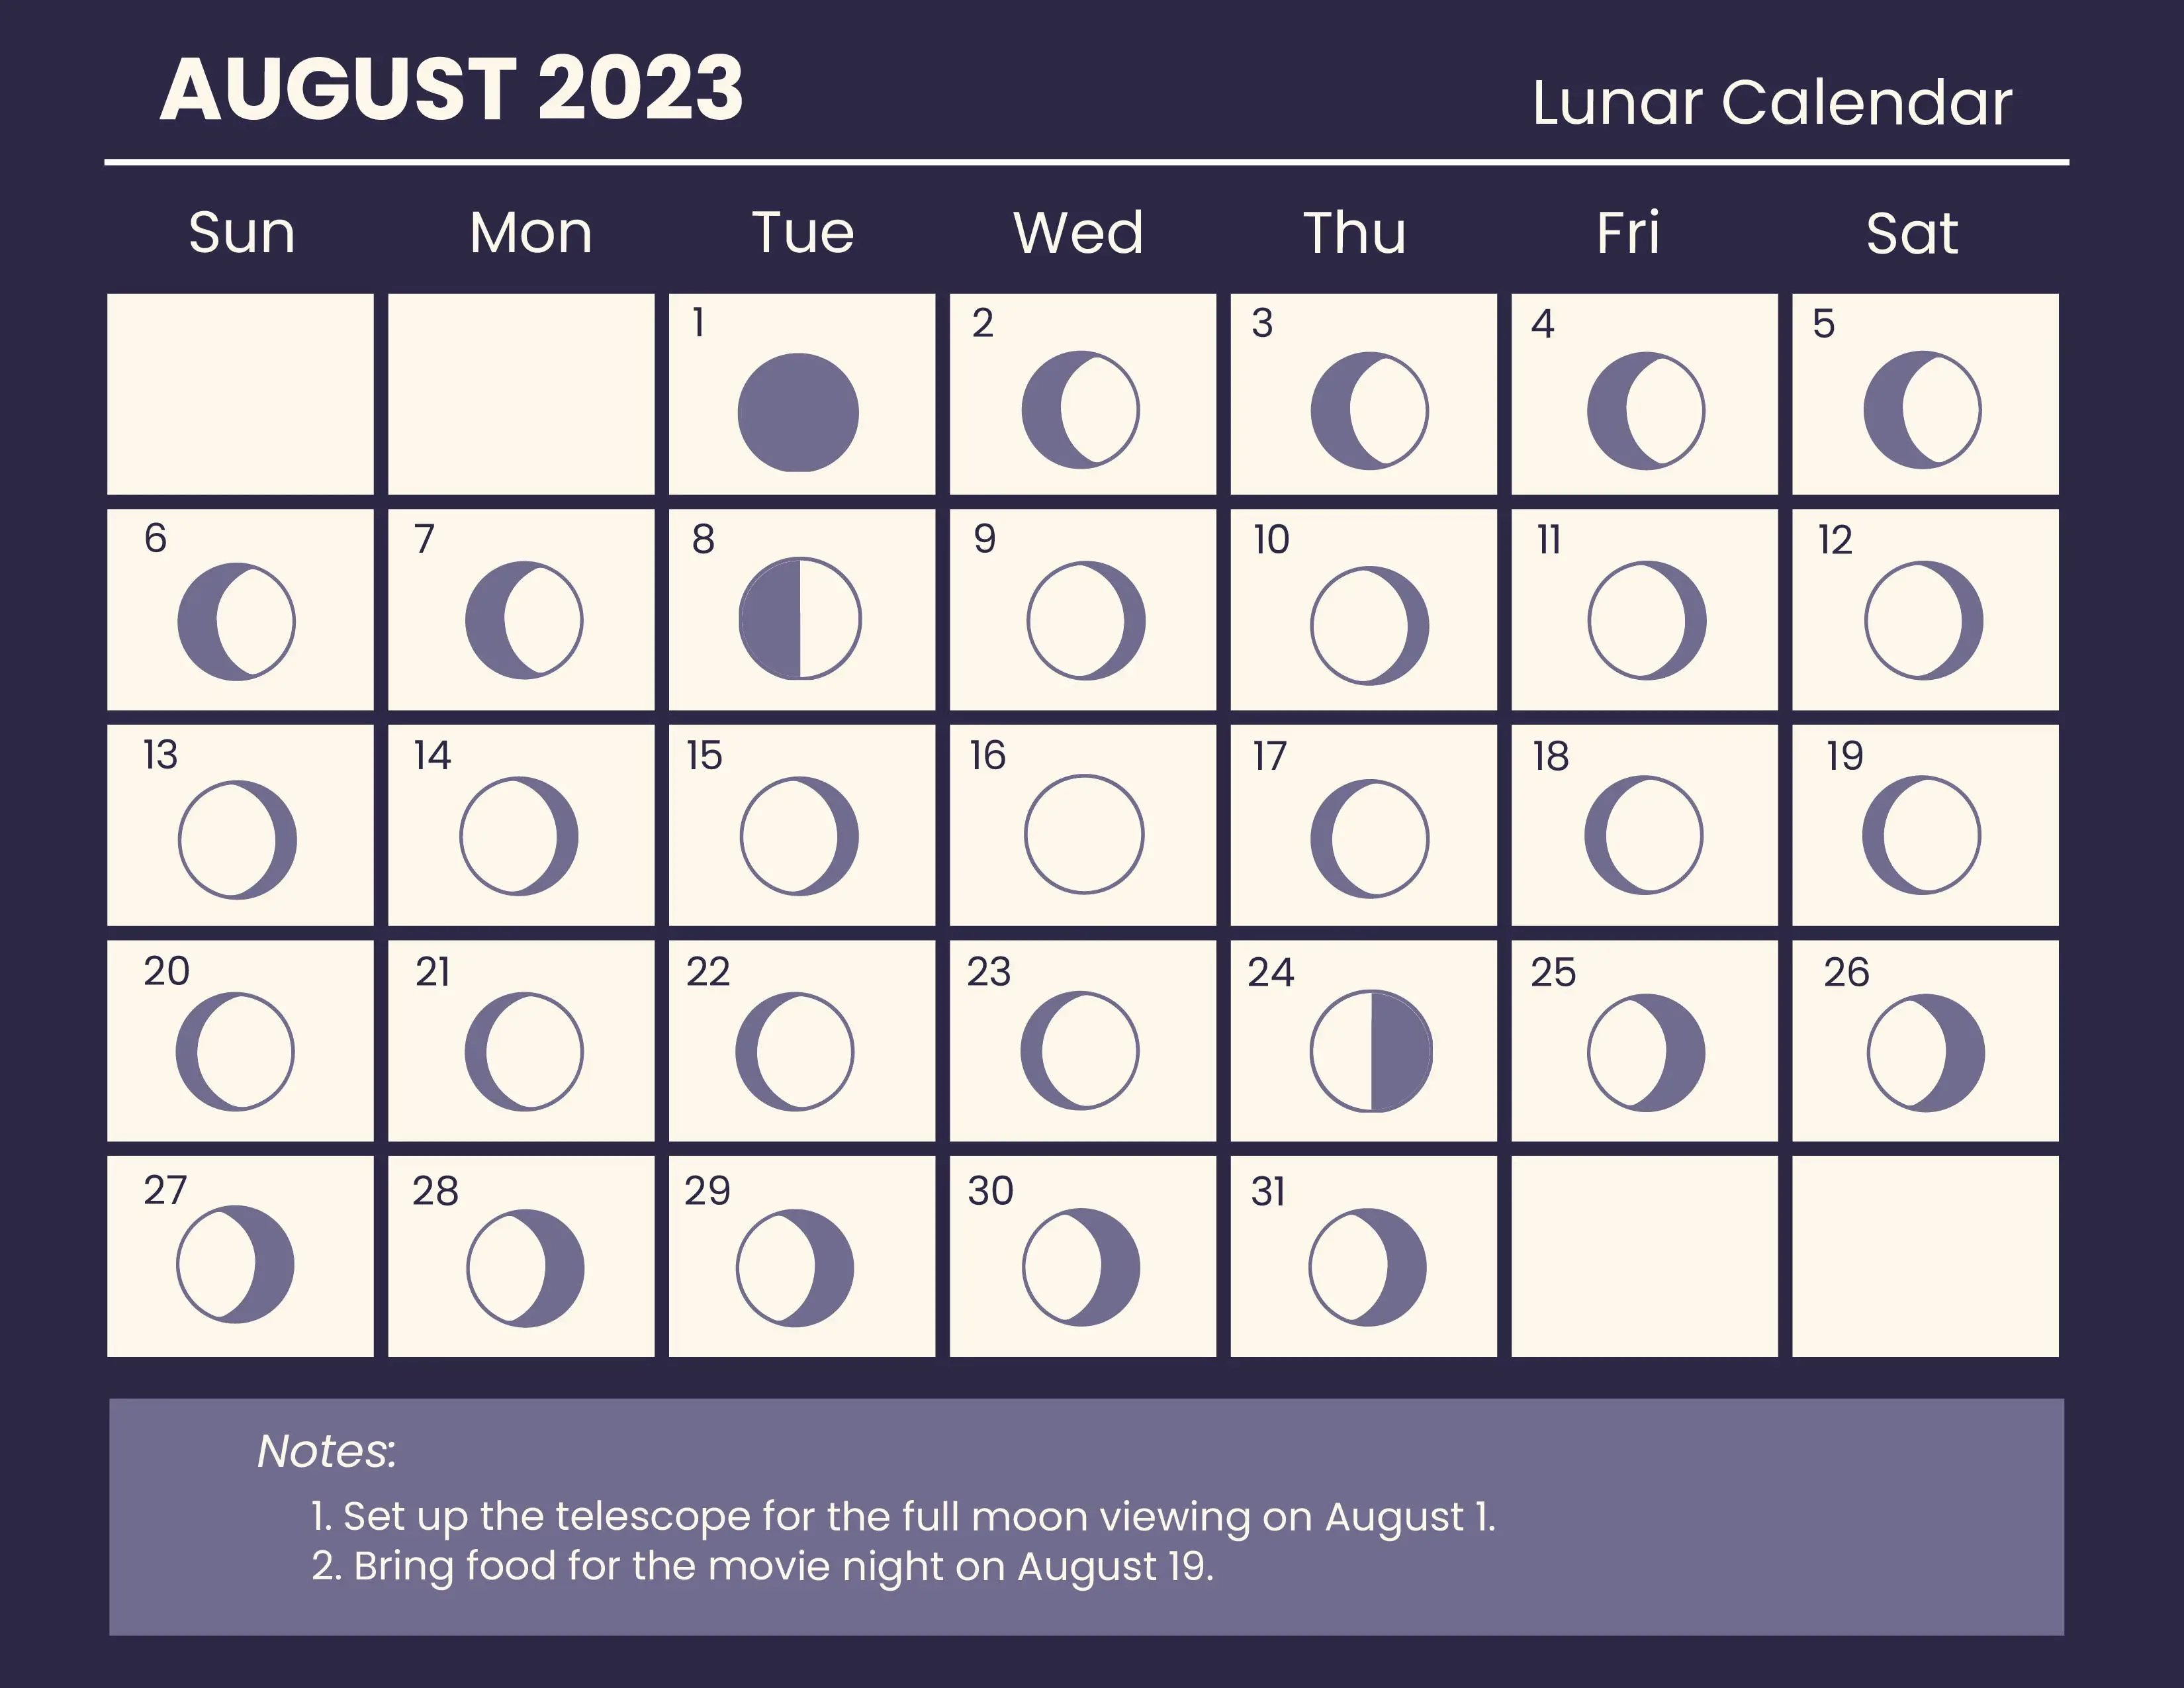 Free Lunar Calendar August 2023